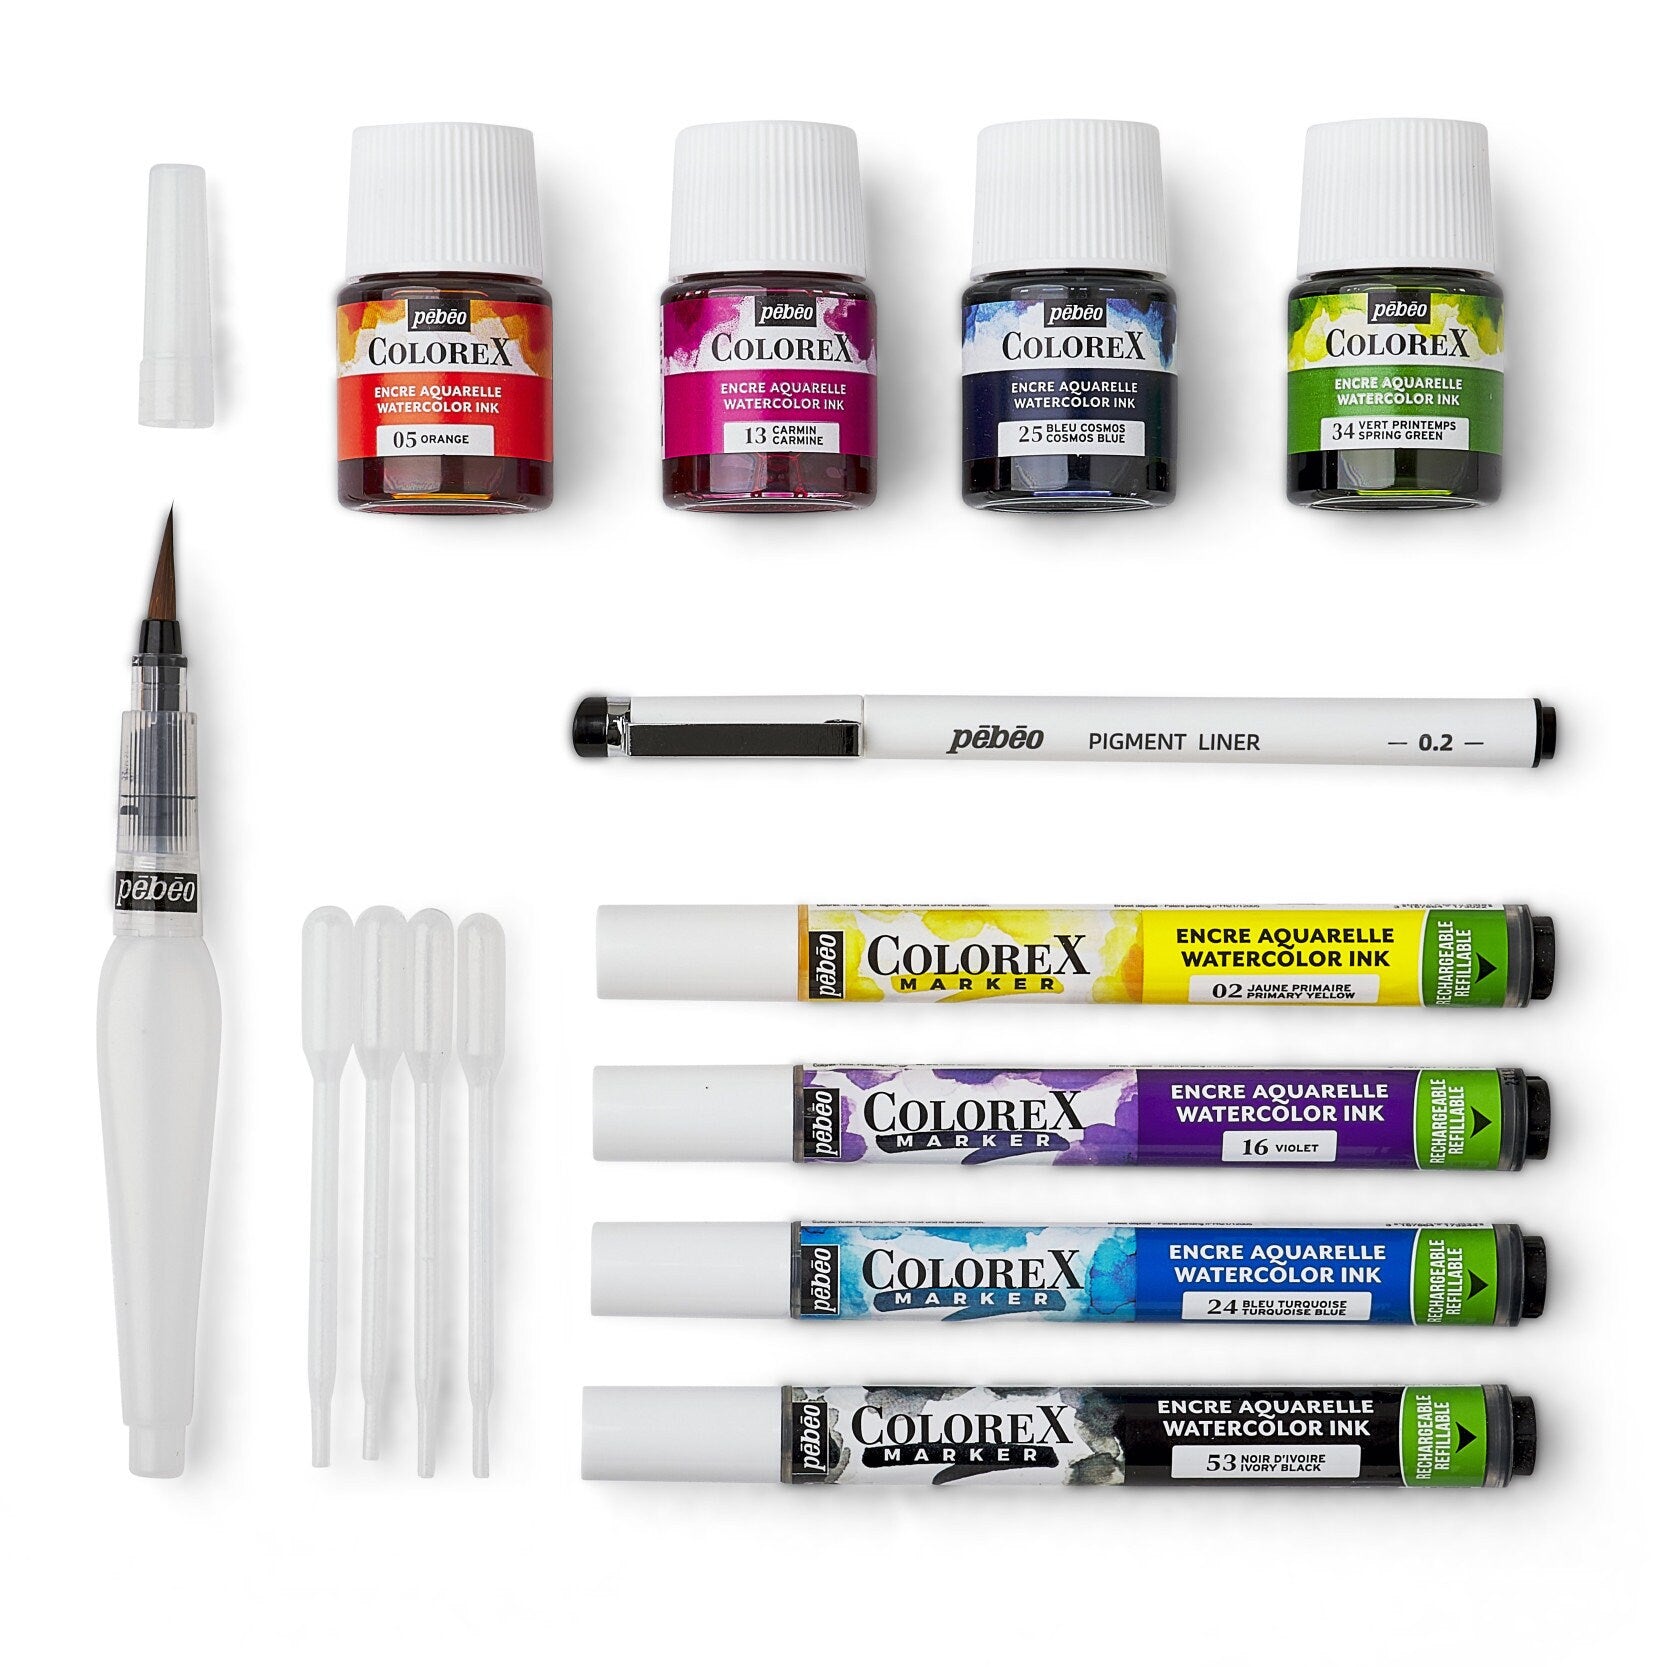 Pebeo - Tinten für Design - Colorex Kalligraphie Discovery Set